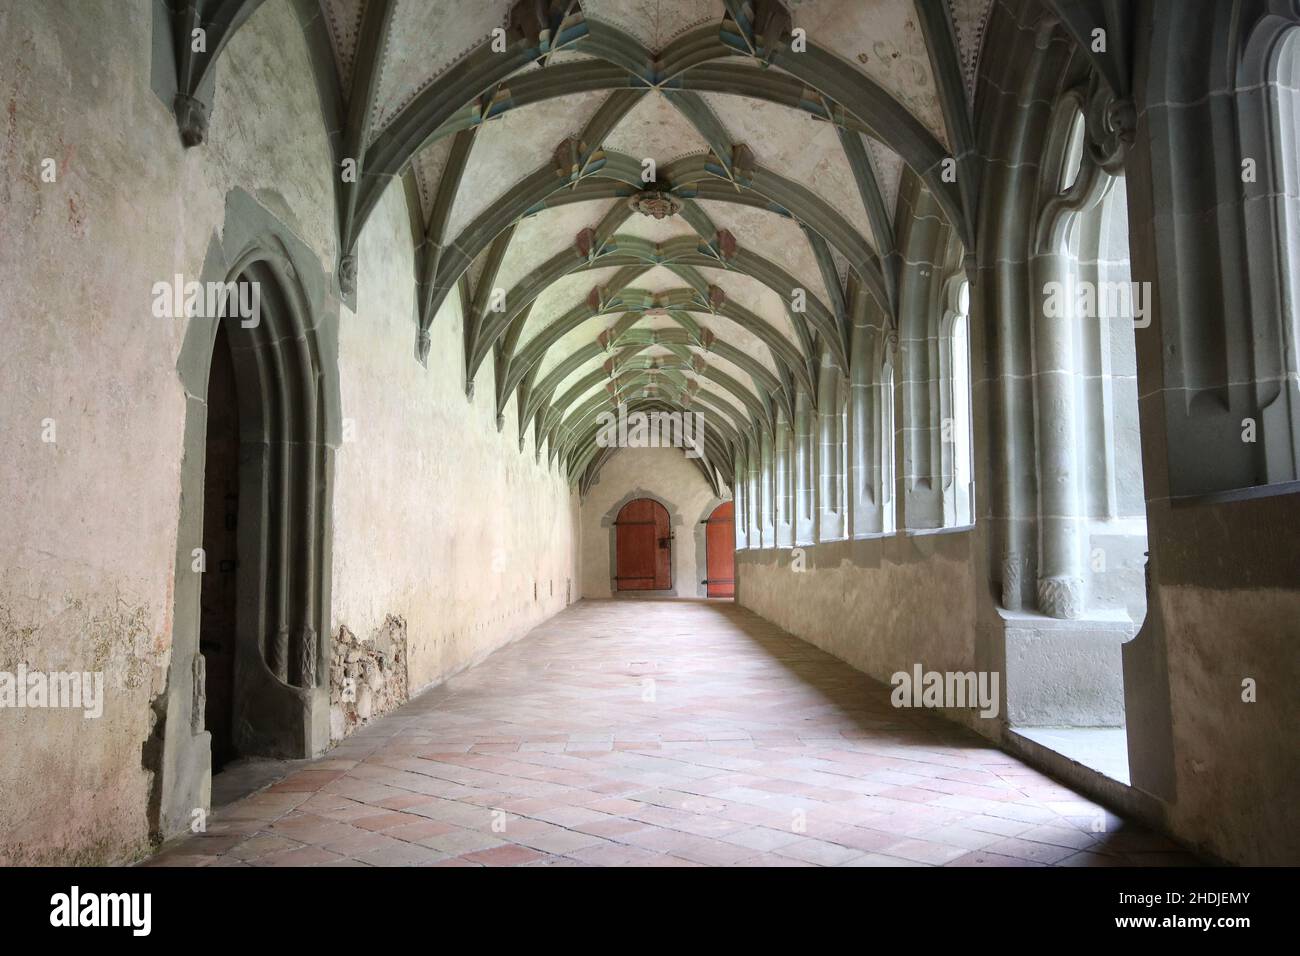 monastery, cloister, st georgen, monasteries, cloisters Stock Photo